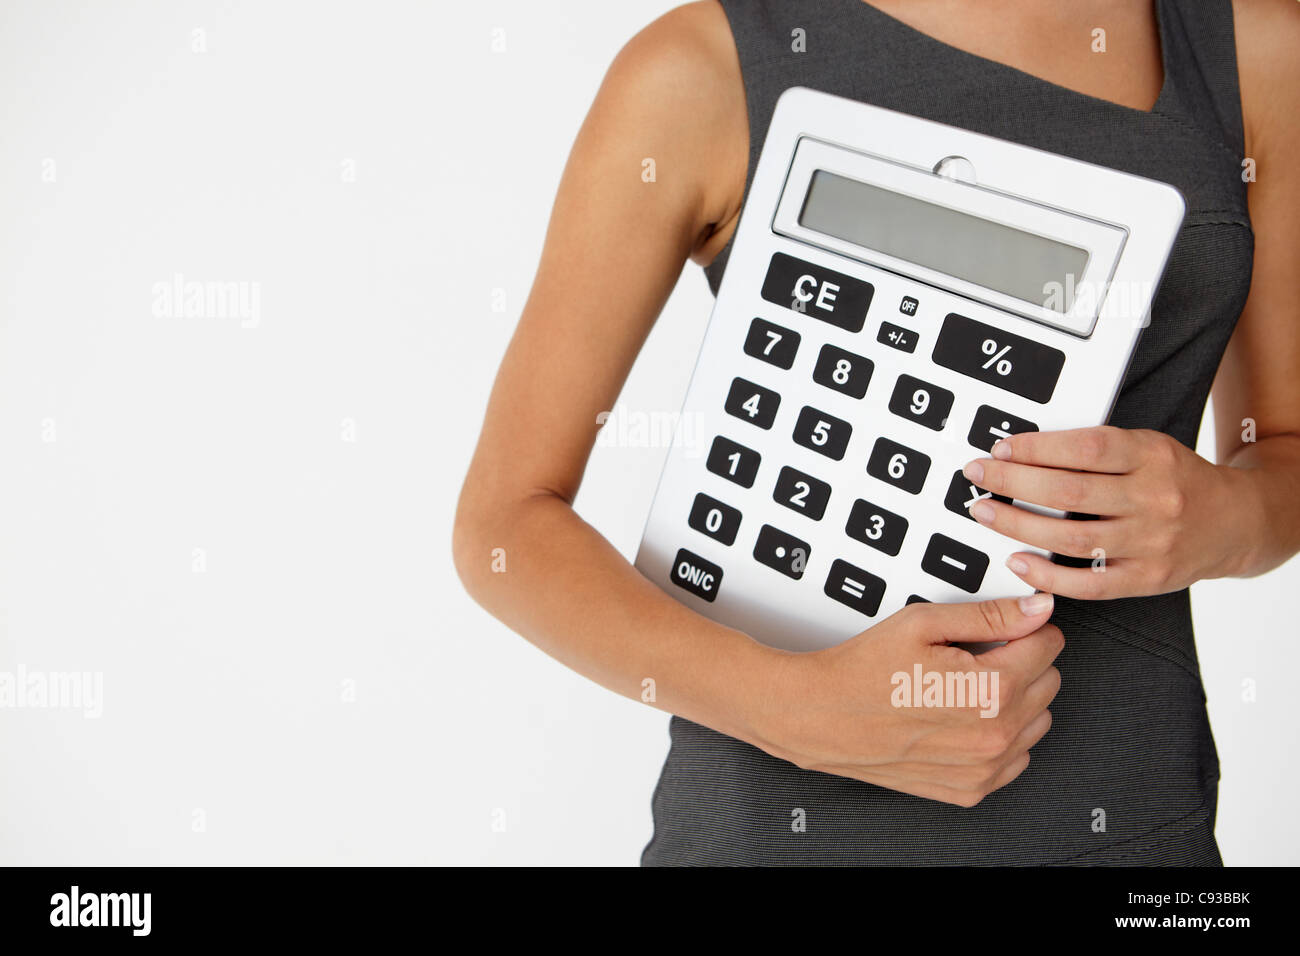 Giovane imprenditrice con calcolatrice gigante Foto stock - Alamy